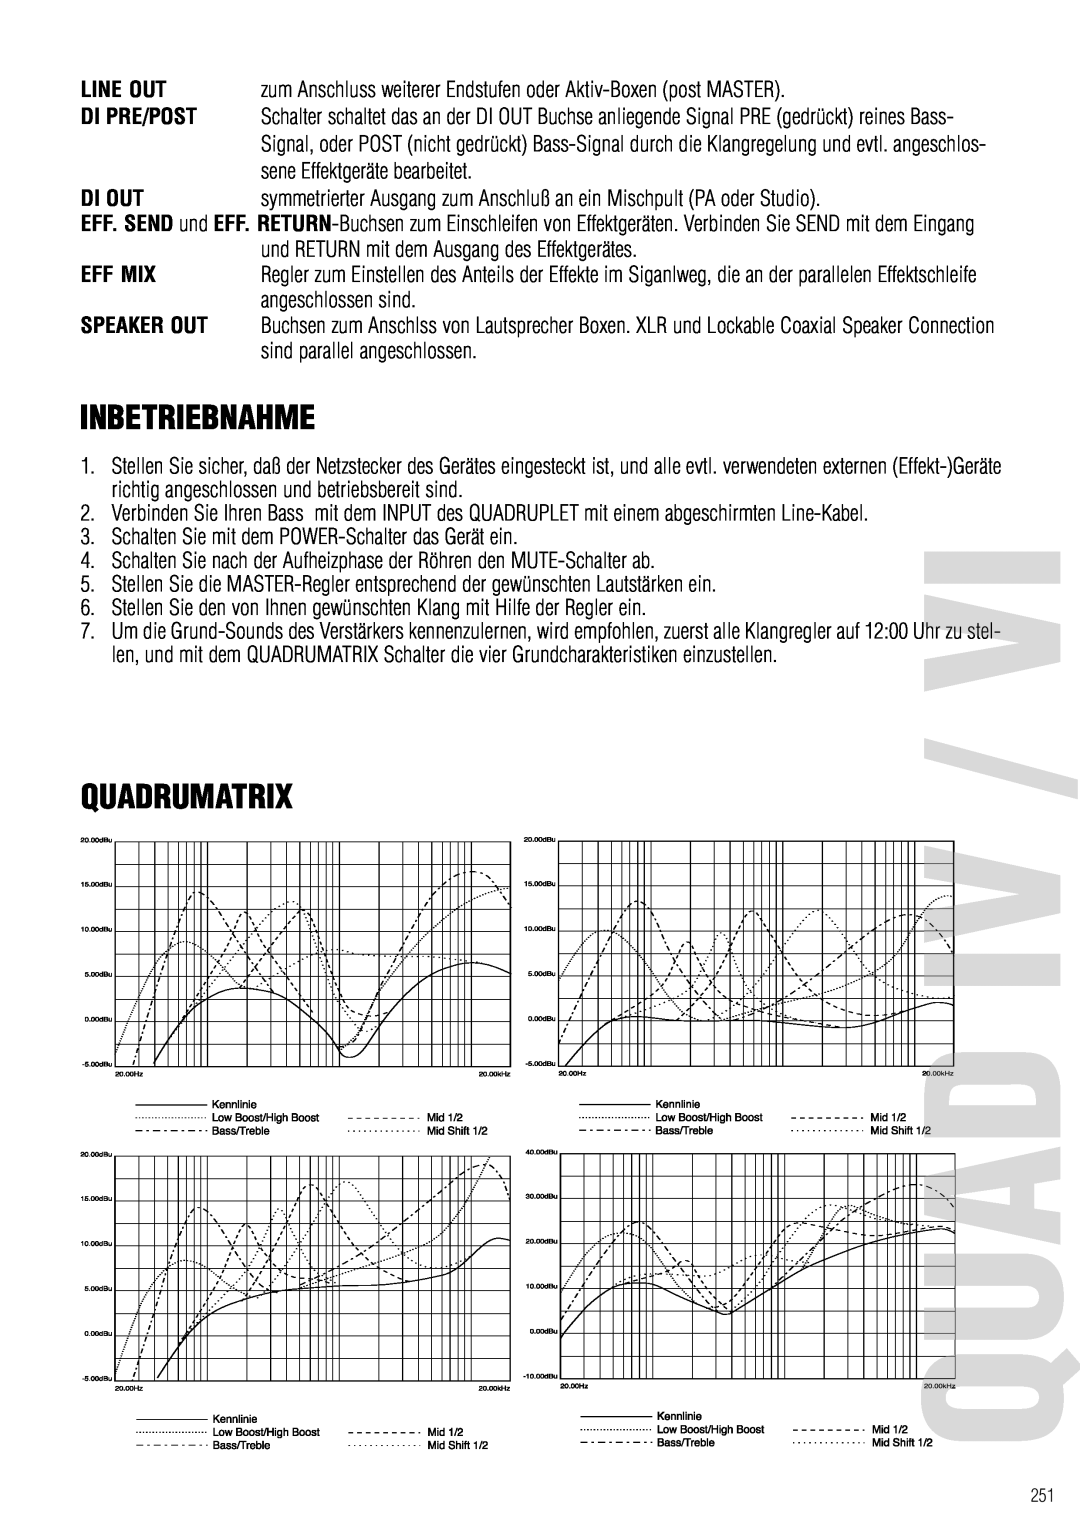 Warwick Quad IV owner manual Inbetriebnahme, Quadrumatrix, Line Out, Di Pre/Post, Di Out, Eff Mix, Speaker Out 